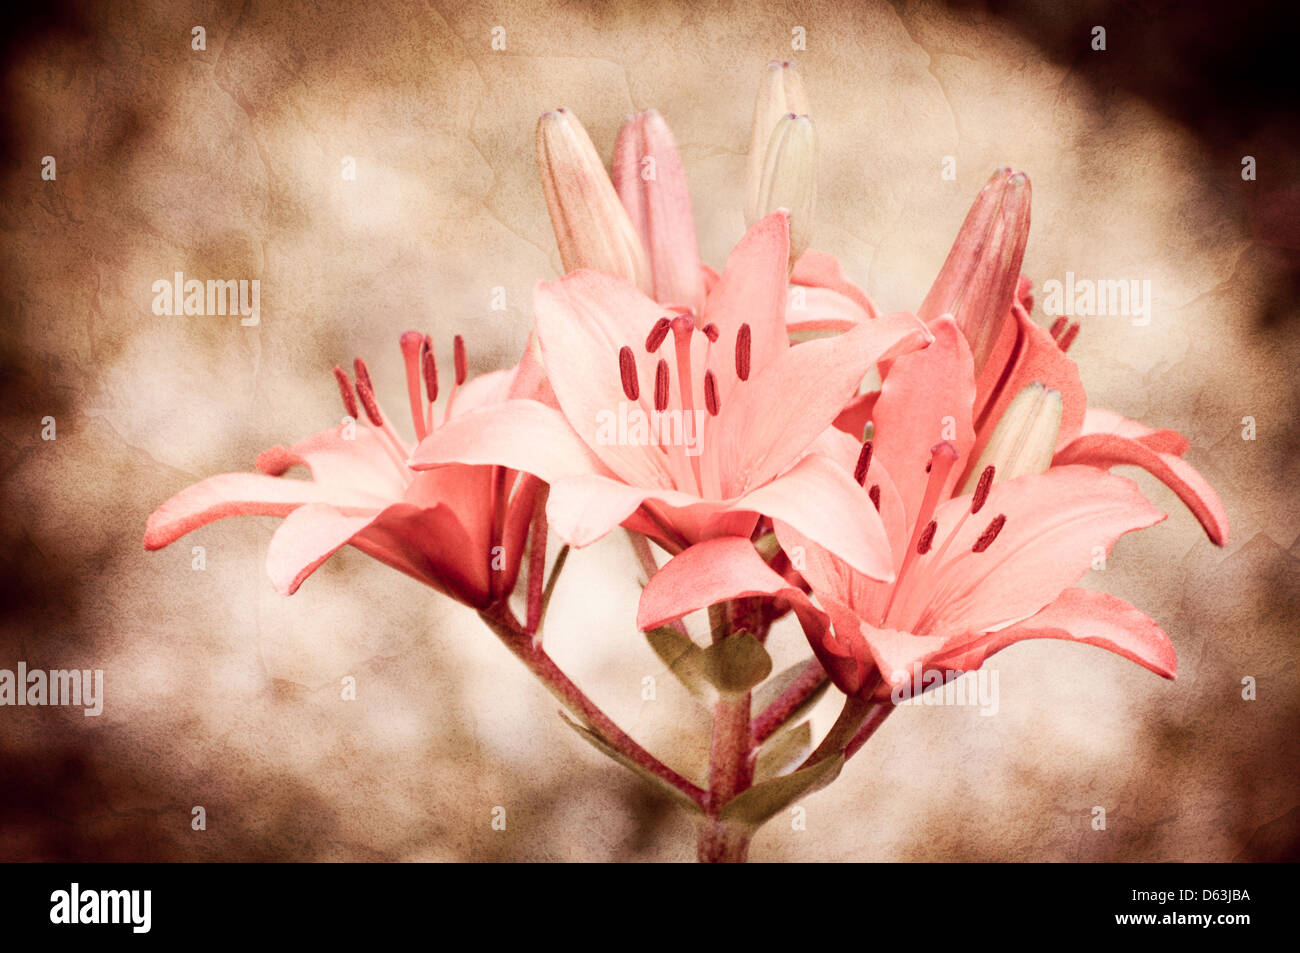 Flowering Lilium plant sepia toned image Stock Photo